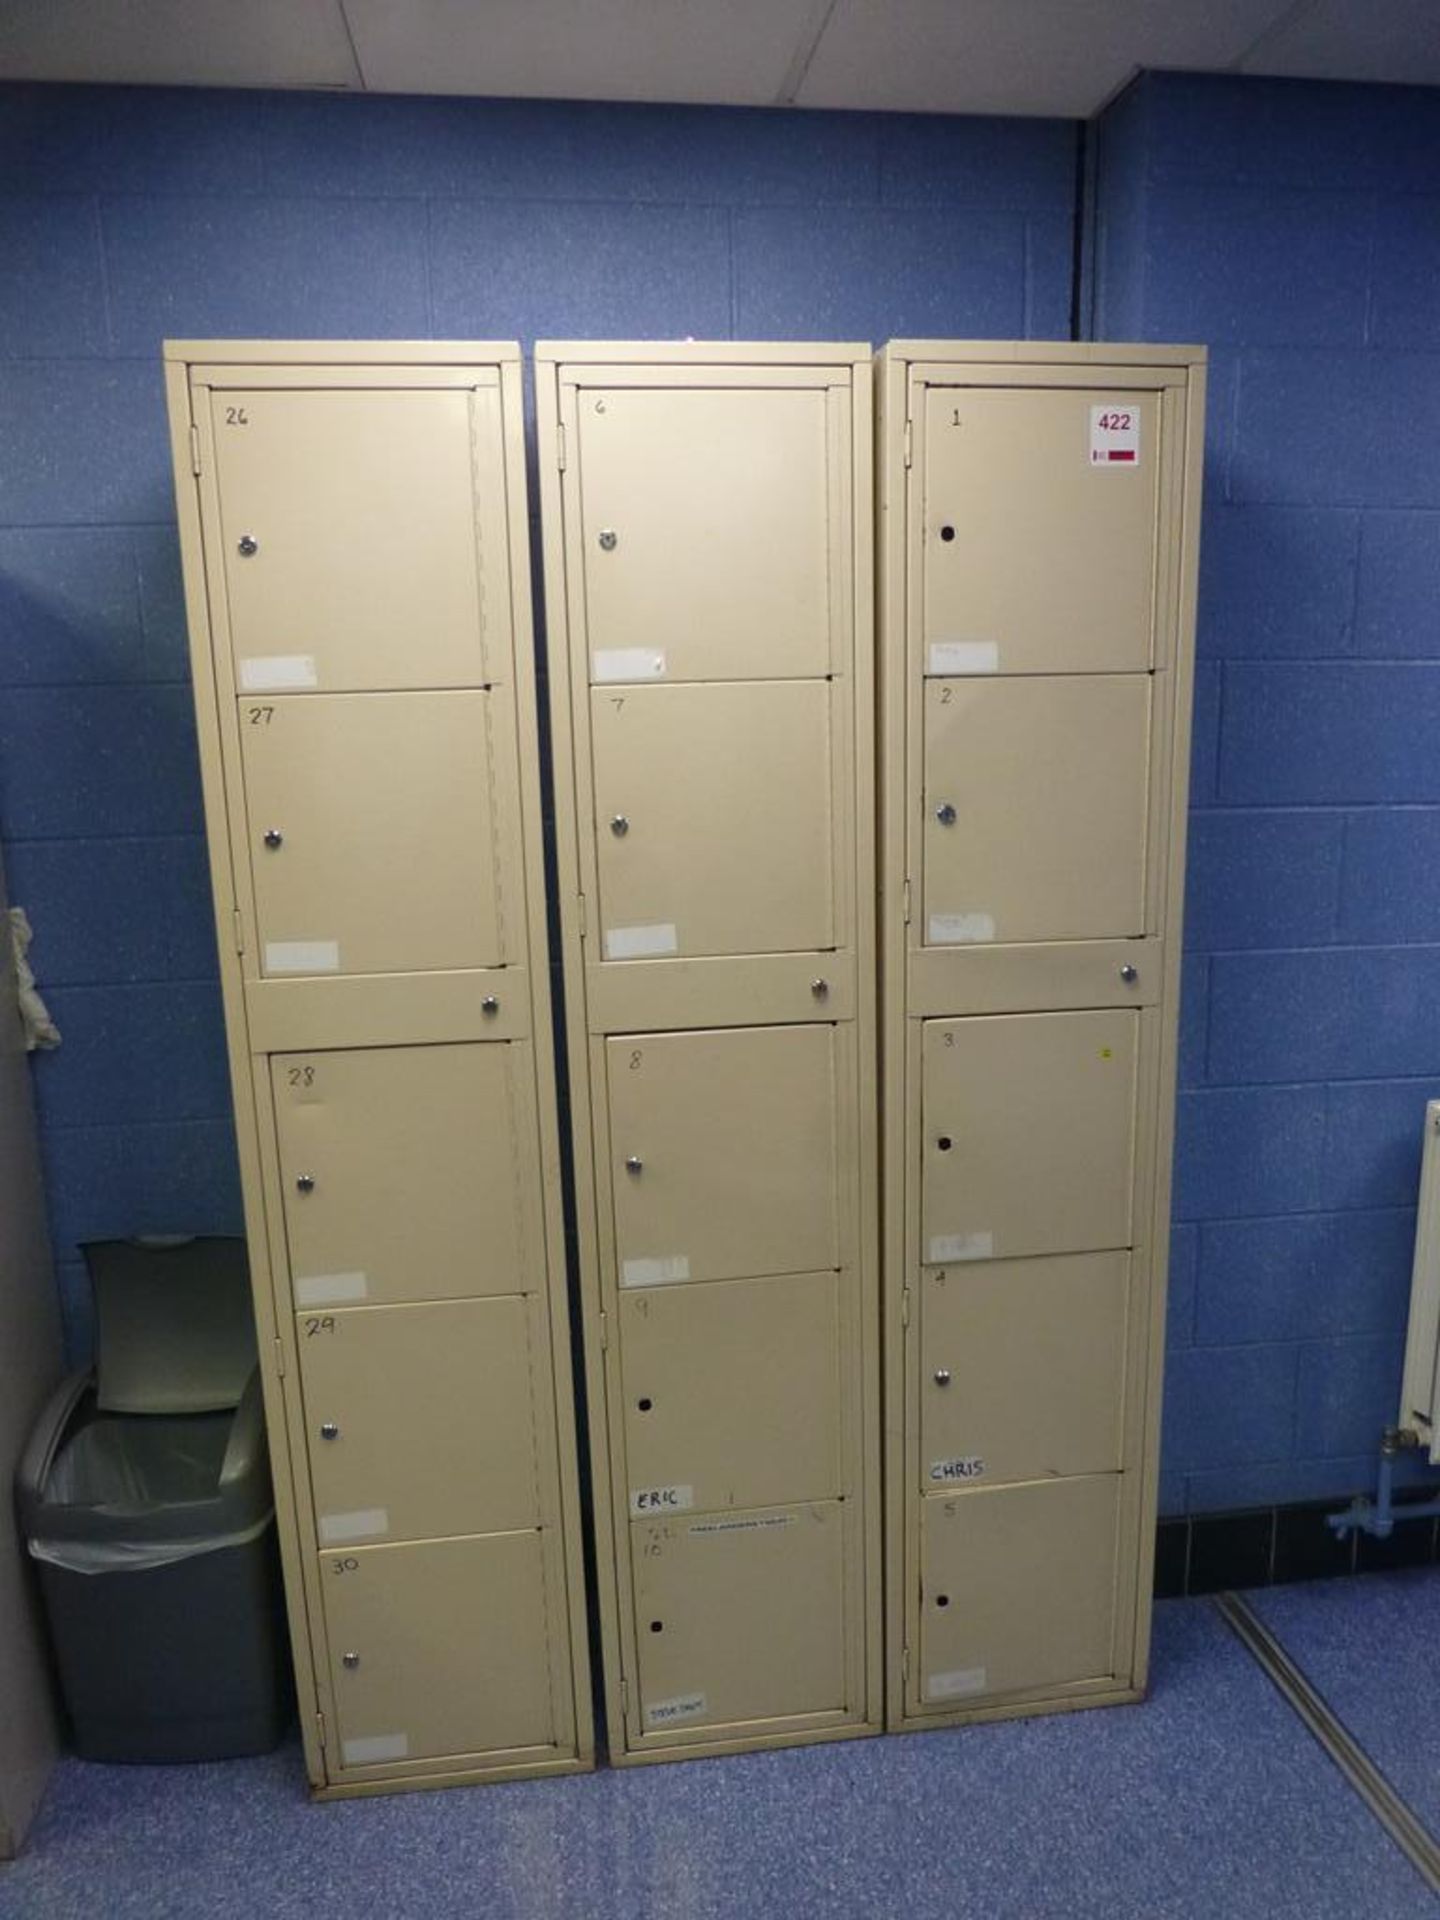 3 steel 5 compartment personal locker units (Beige)